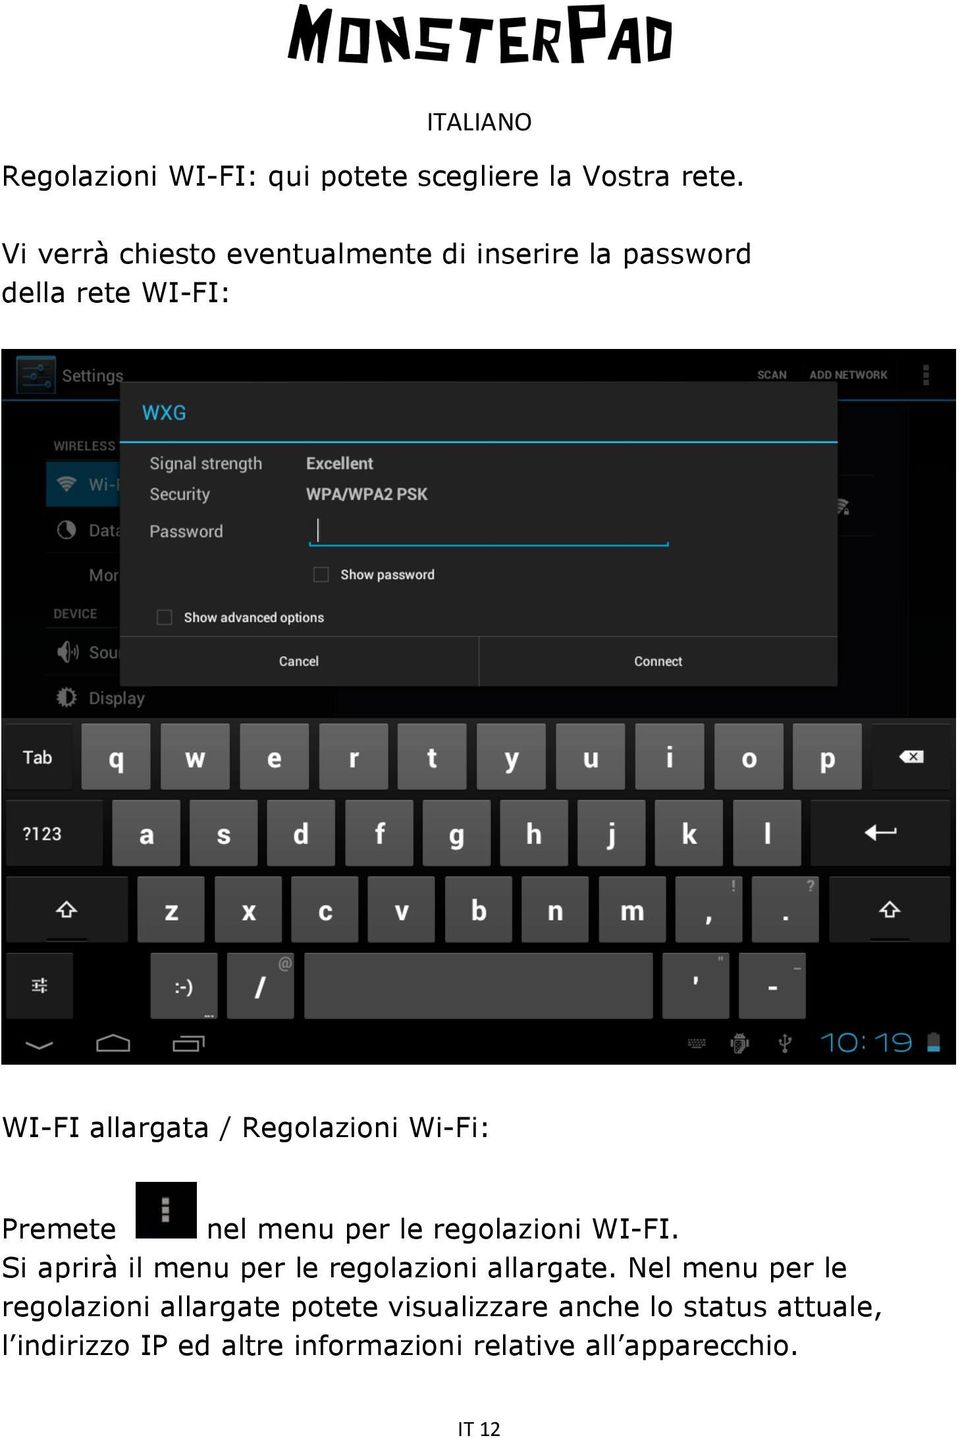 Regolazioni Wi-Fi: Premete nel menu per le regolazioni WI-FI.